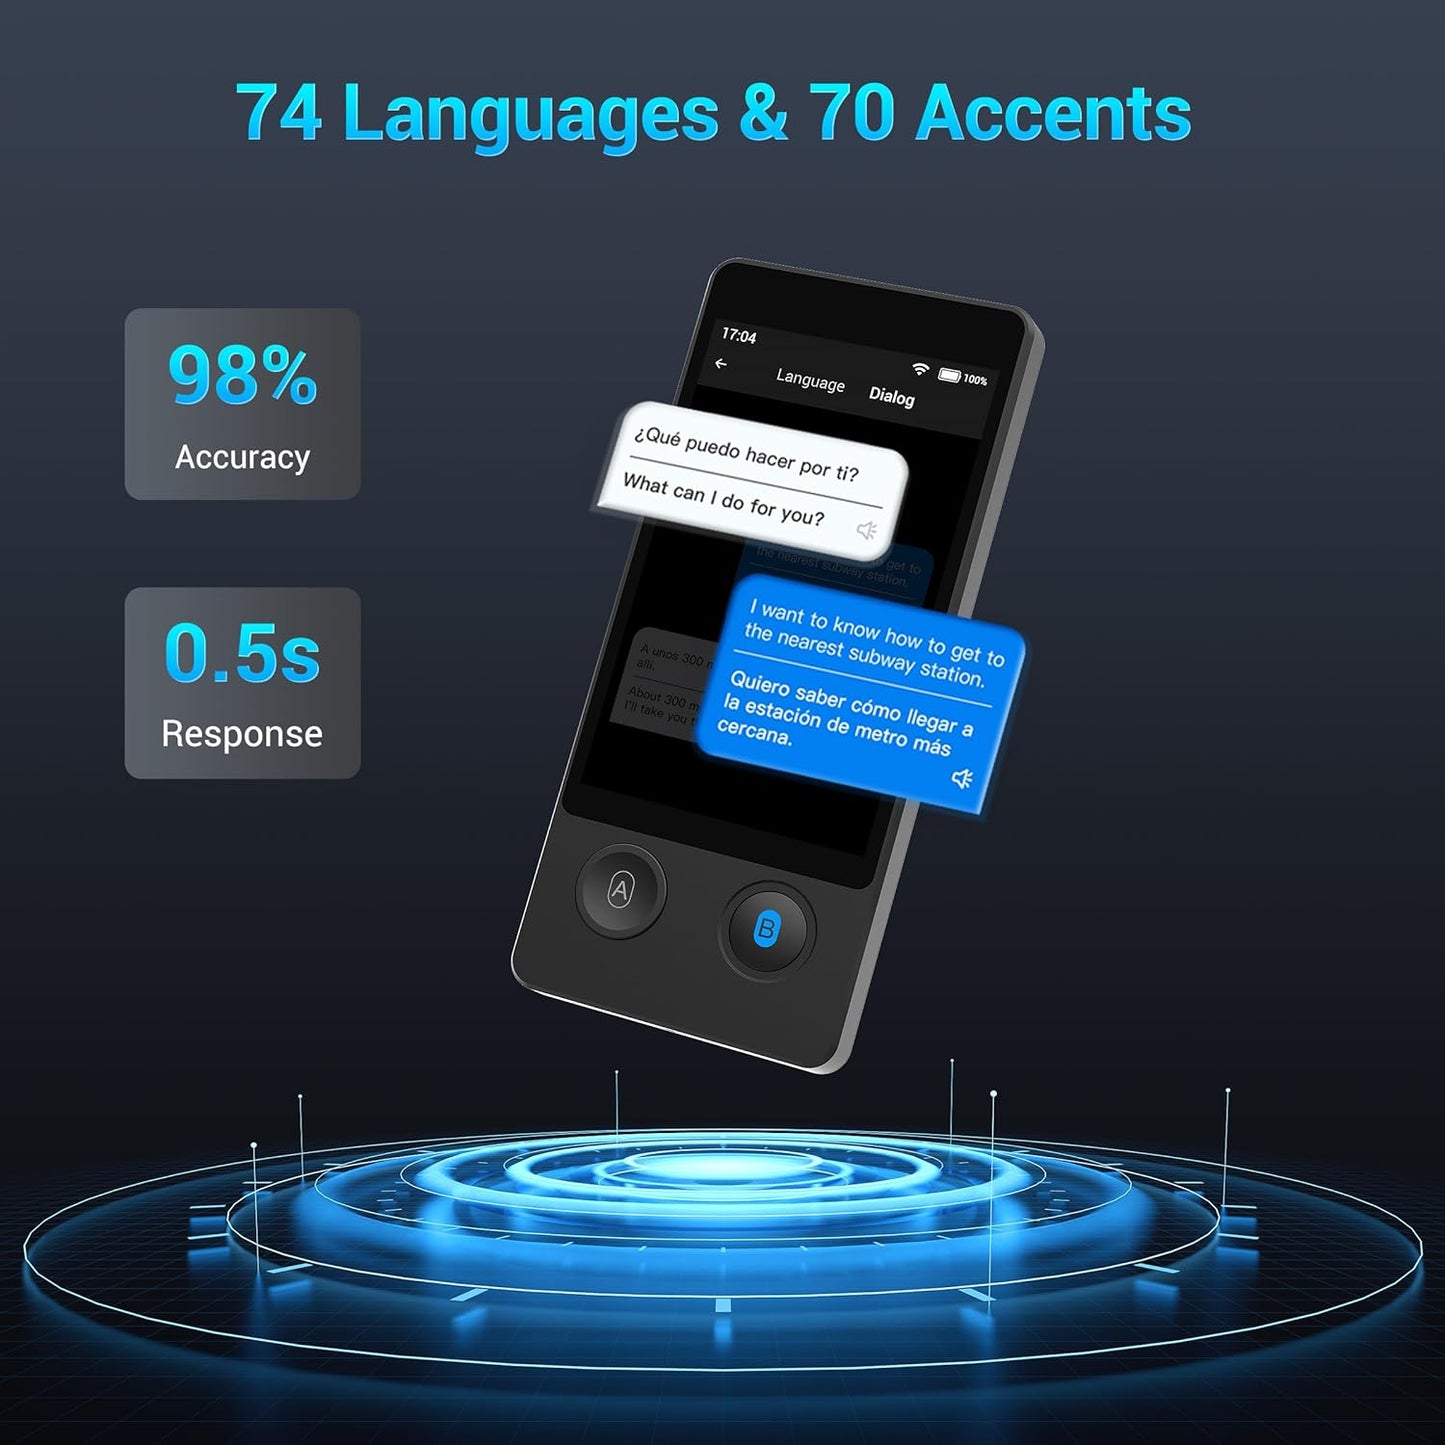 Wooask Offline Language Translator W12 Upgraded Version No WiFi Needed, Supports 144 Languages Translation Photo Translation High Accraucy Fast Transla